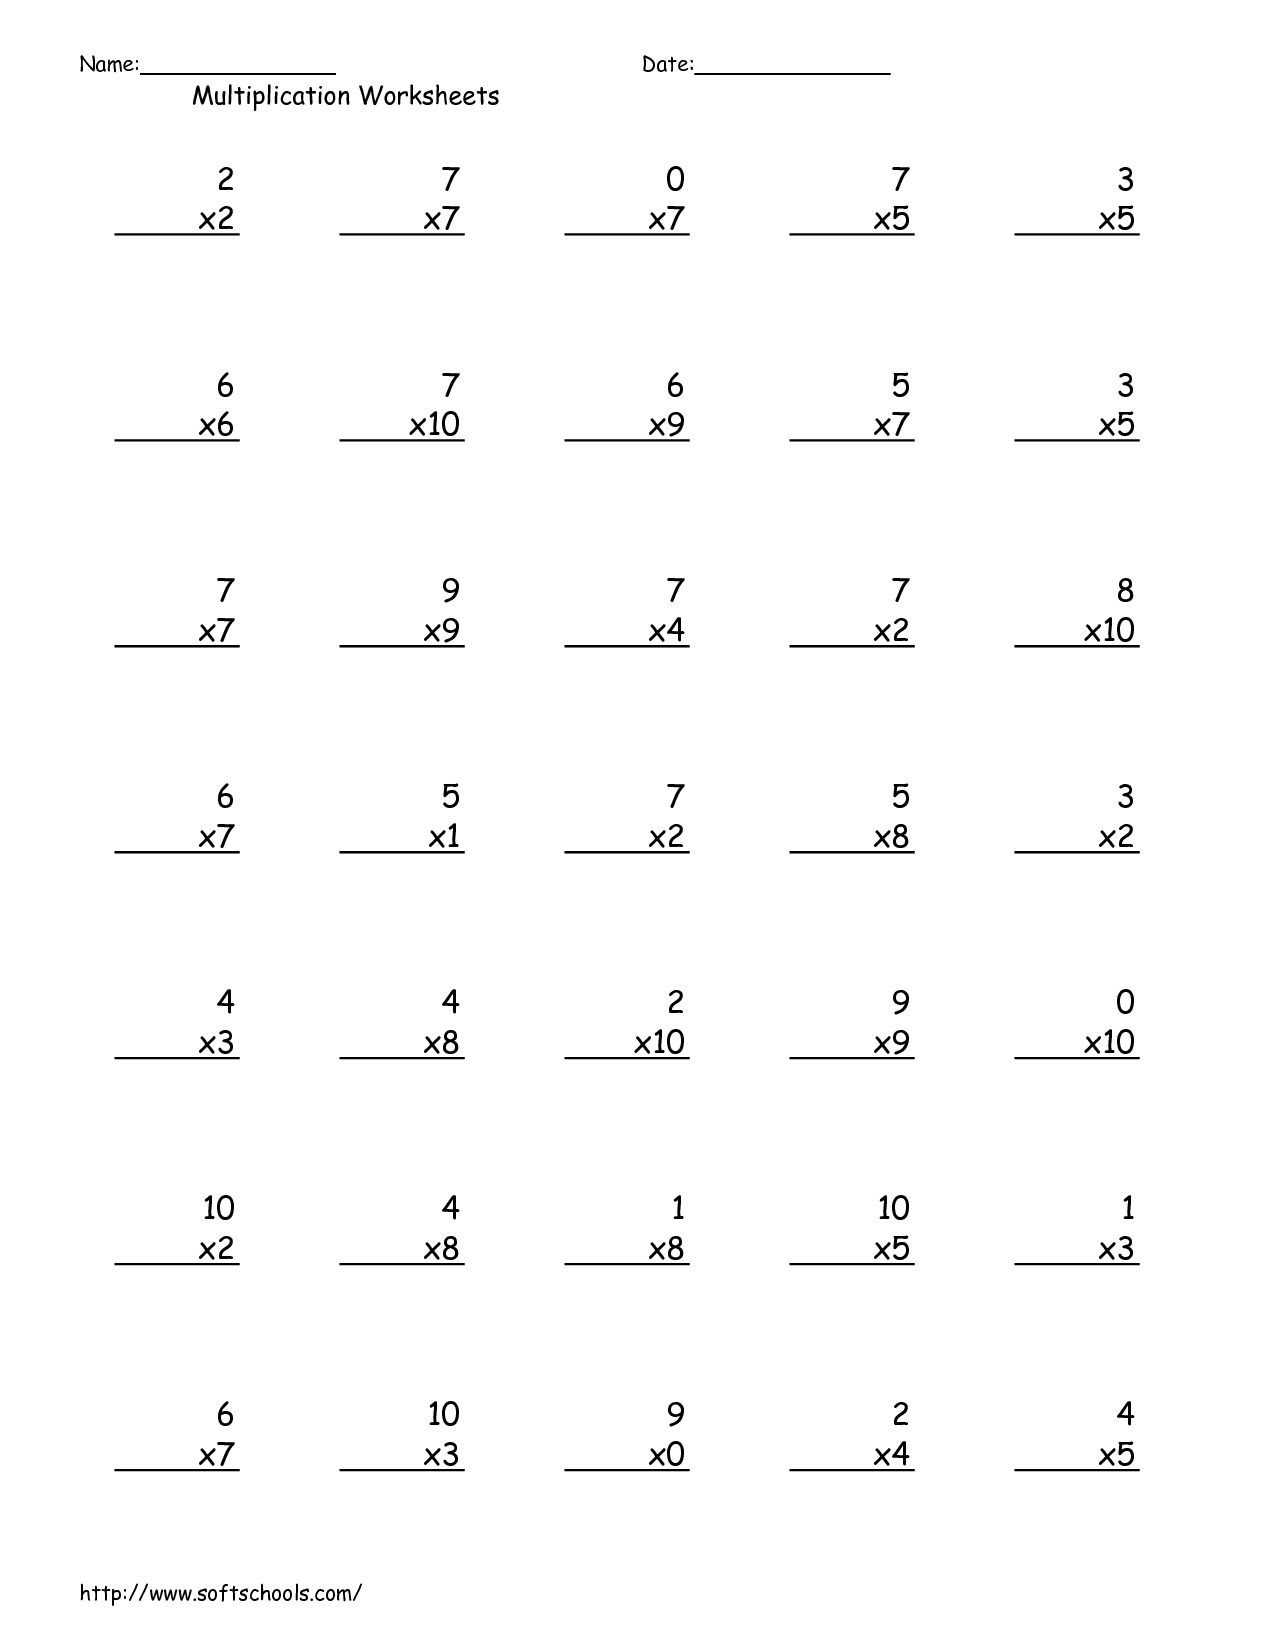 Multiplication X2 Worksheet